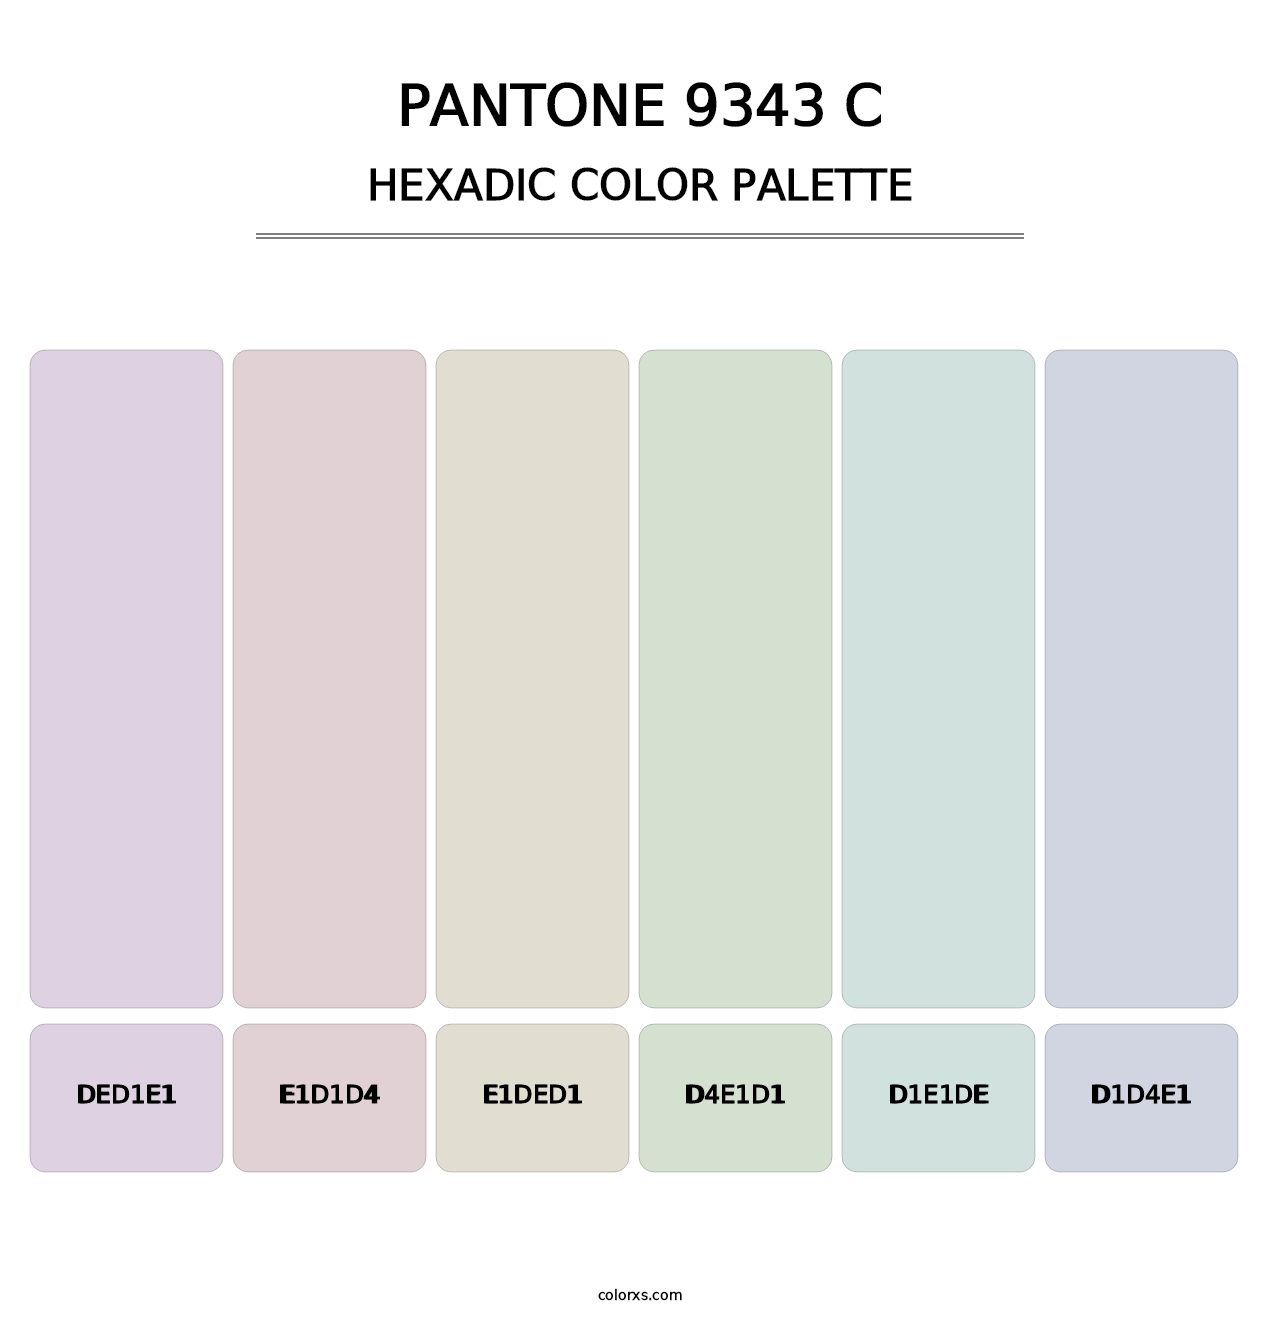 PANTONE 9343 C - Hexadic Color Palette